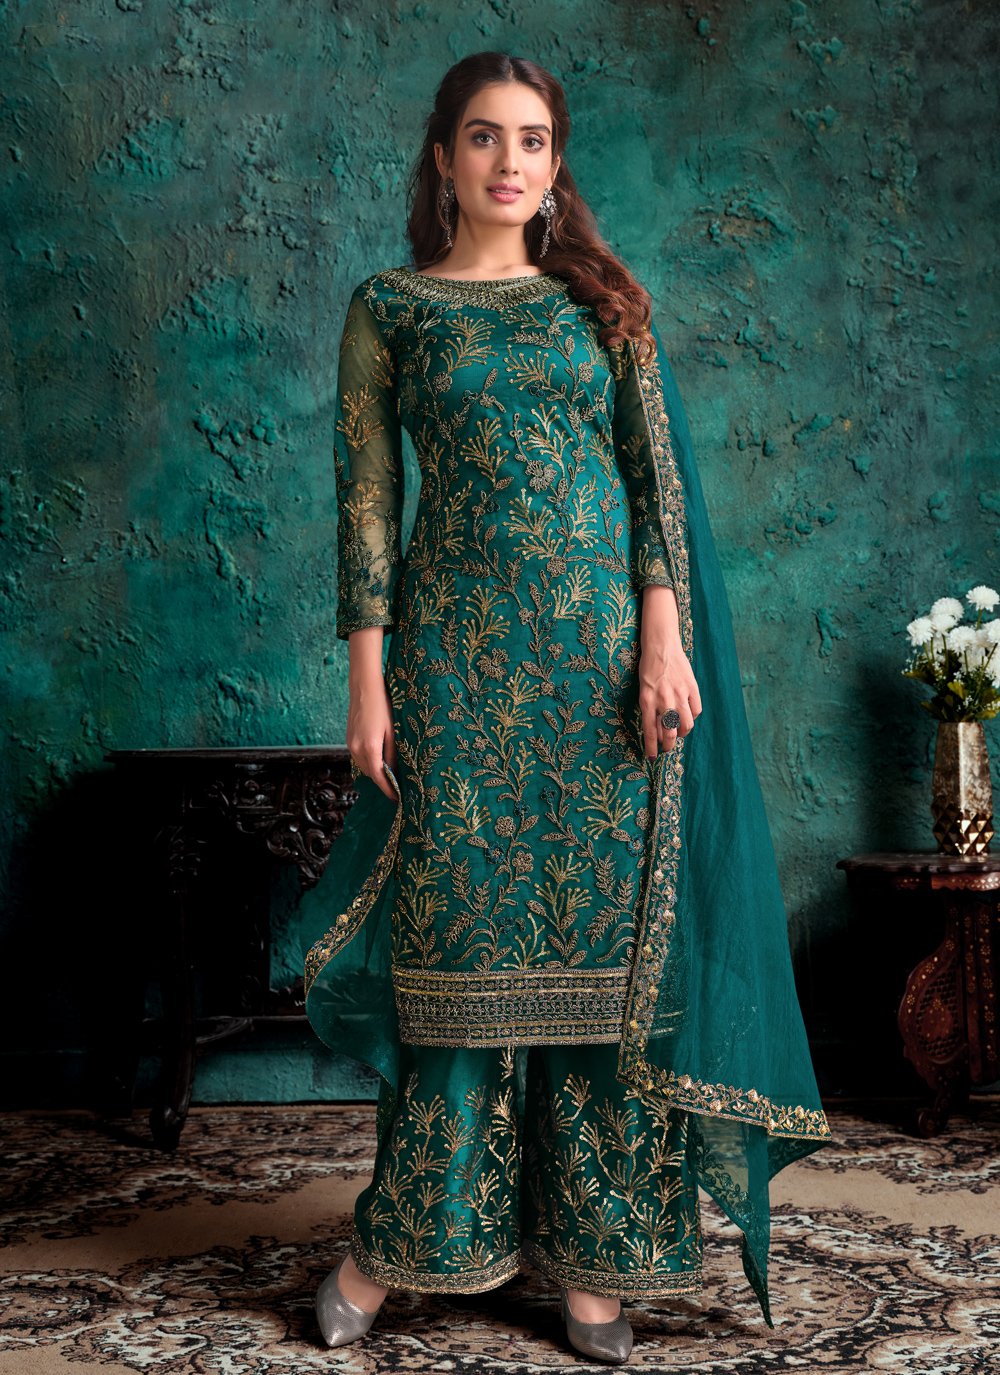 Teal Green Net Suit - Buy Designer Fancy Pakistani Style Suit